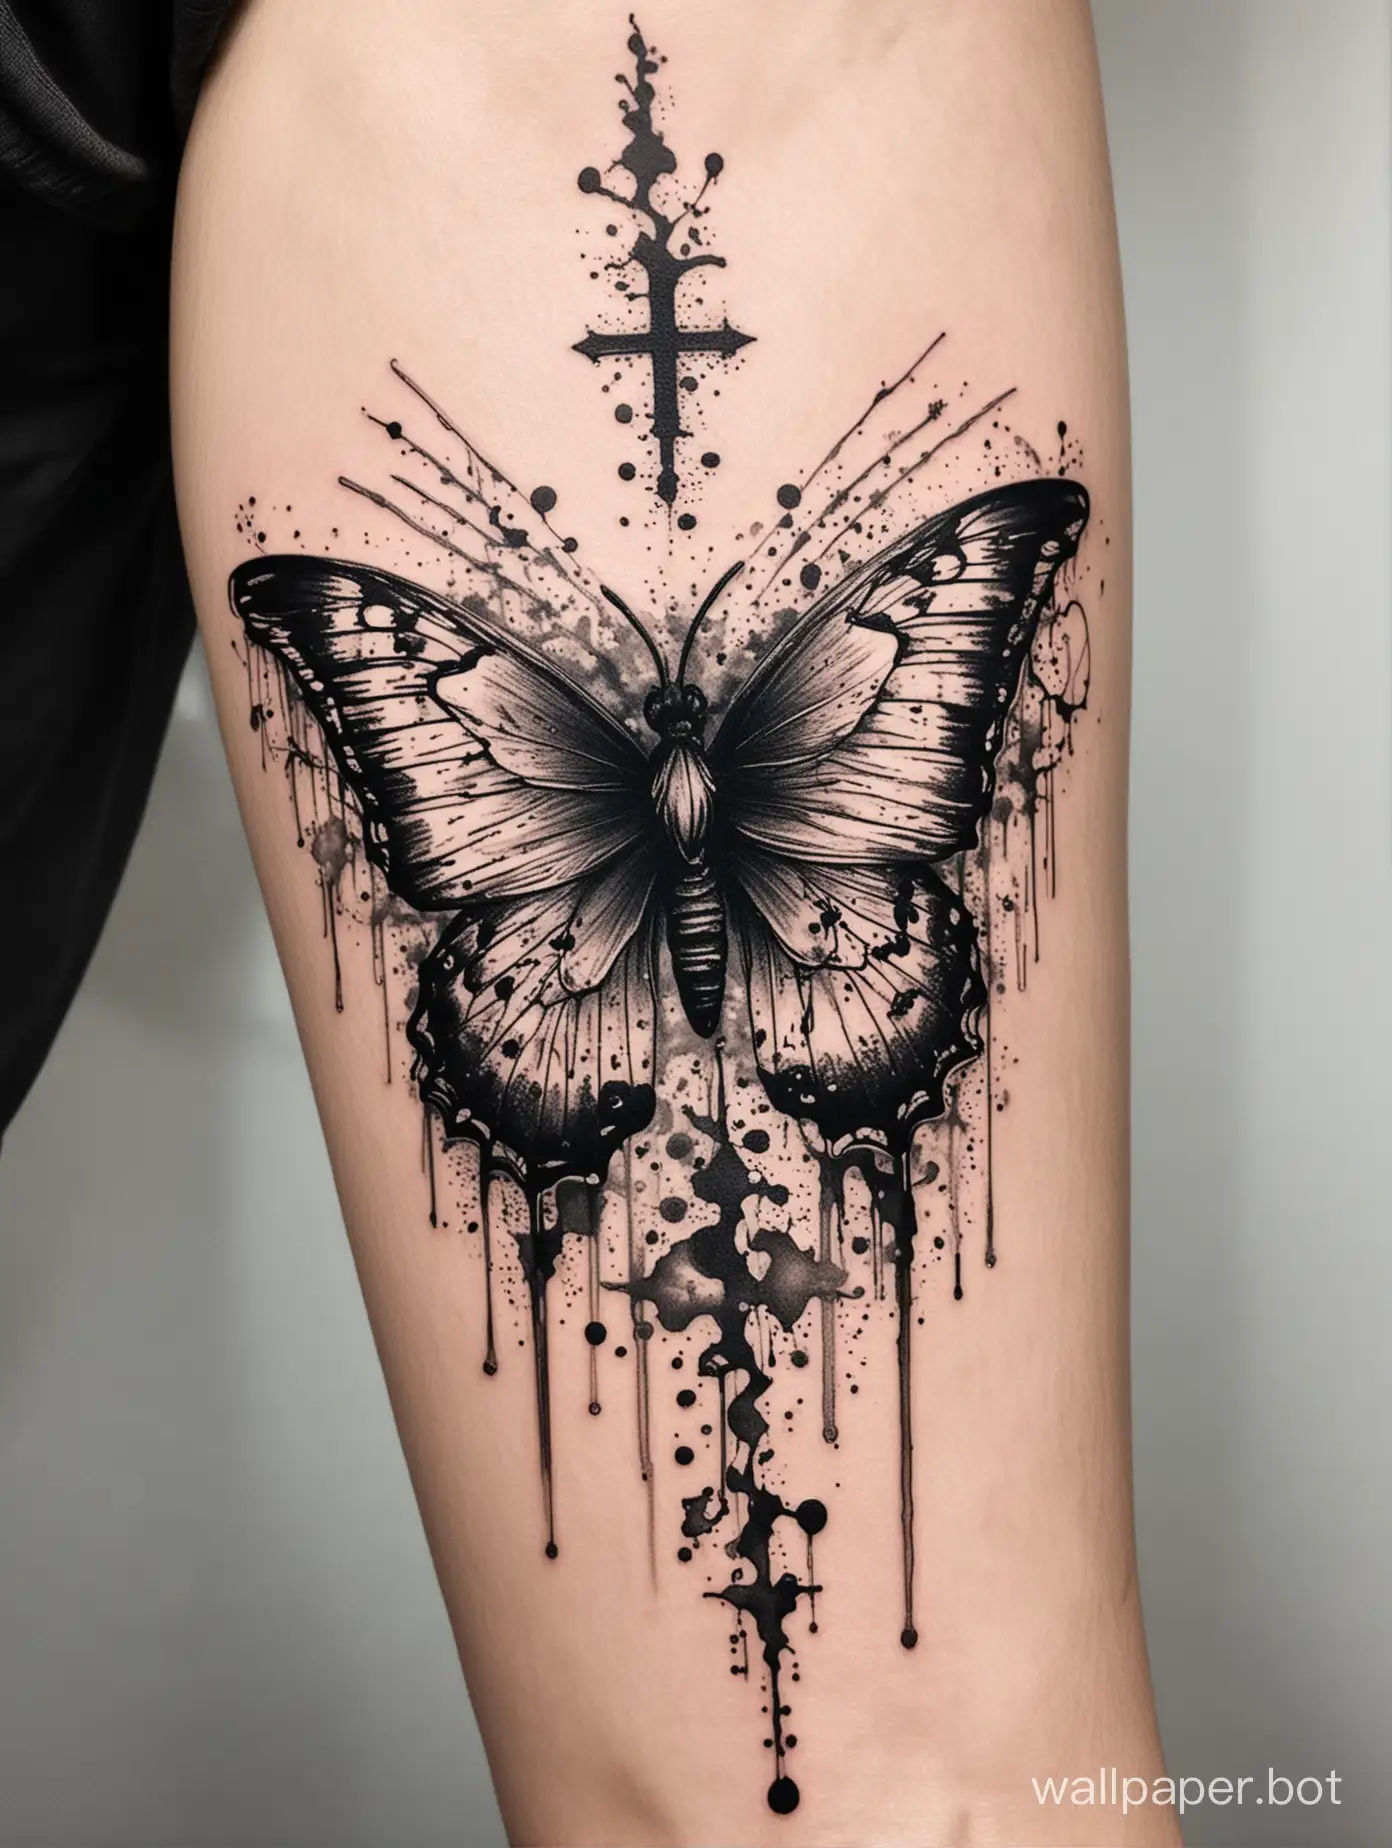 butterfly, cross lineart tattoo, explosive blackwork, organic lines, dense horror lines, white background, fluid dripping ink